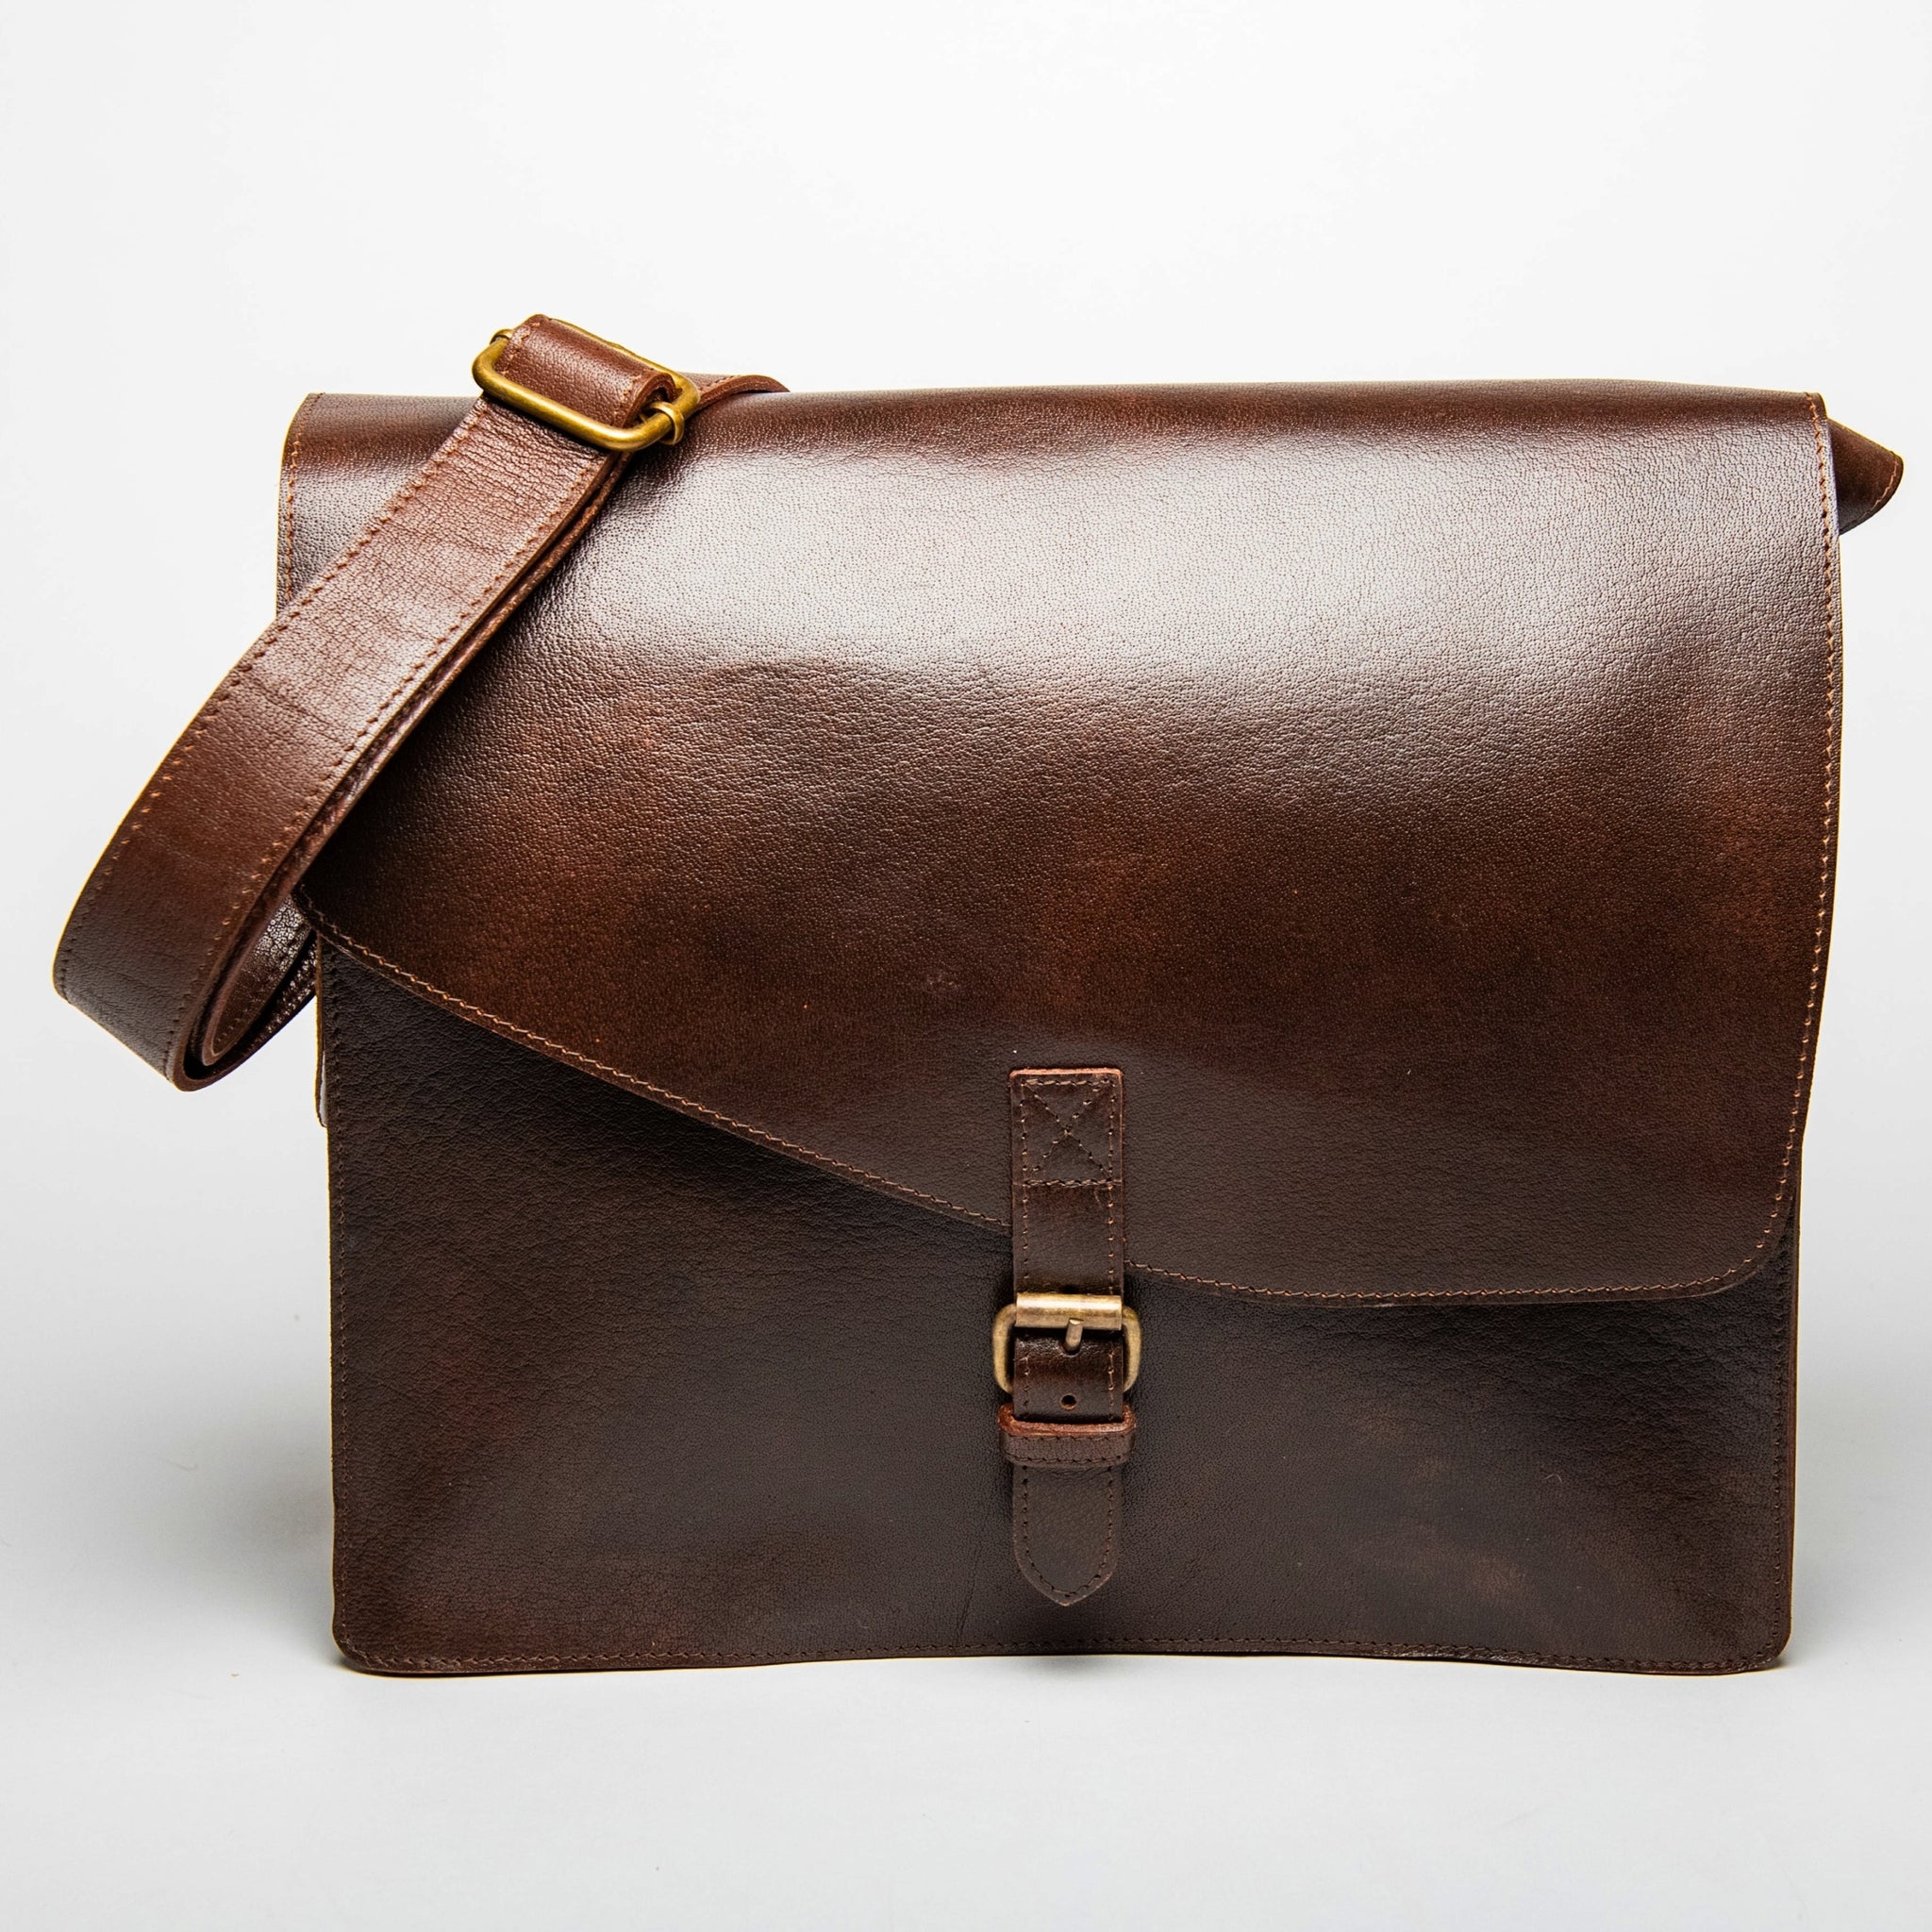 Adam Messenger Bag 2.0: Timeless Full-Grain Leather Craftsmanship – HIDES